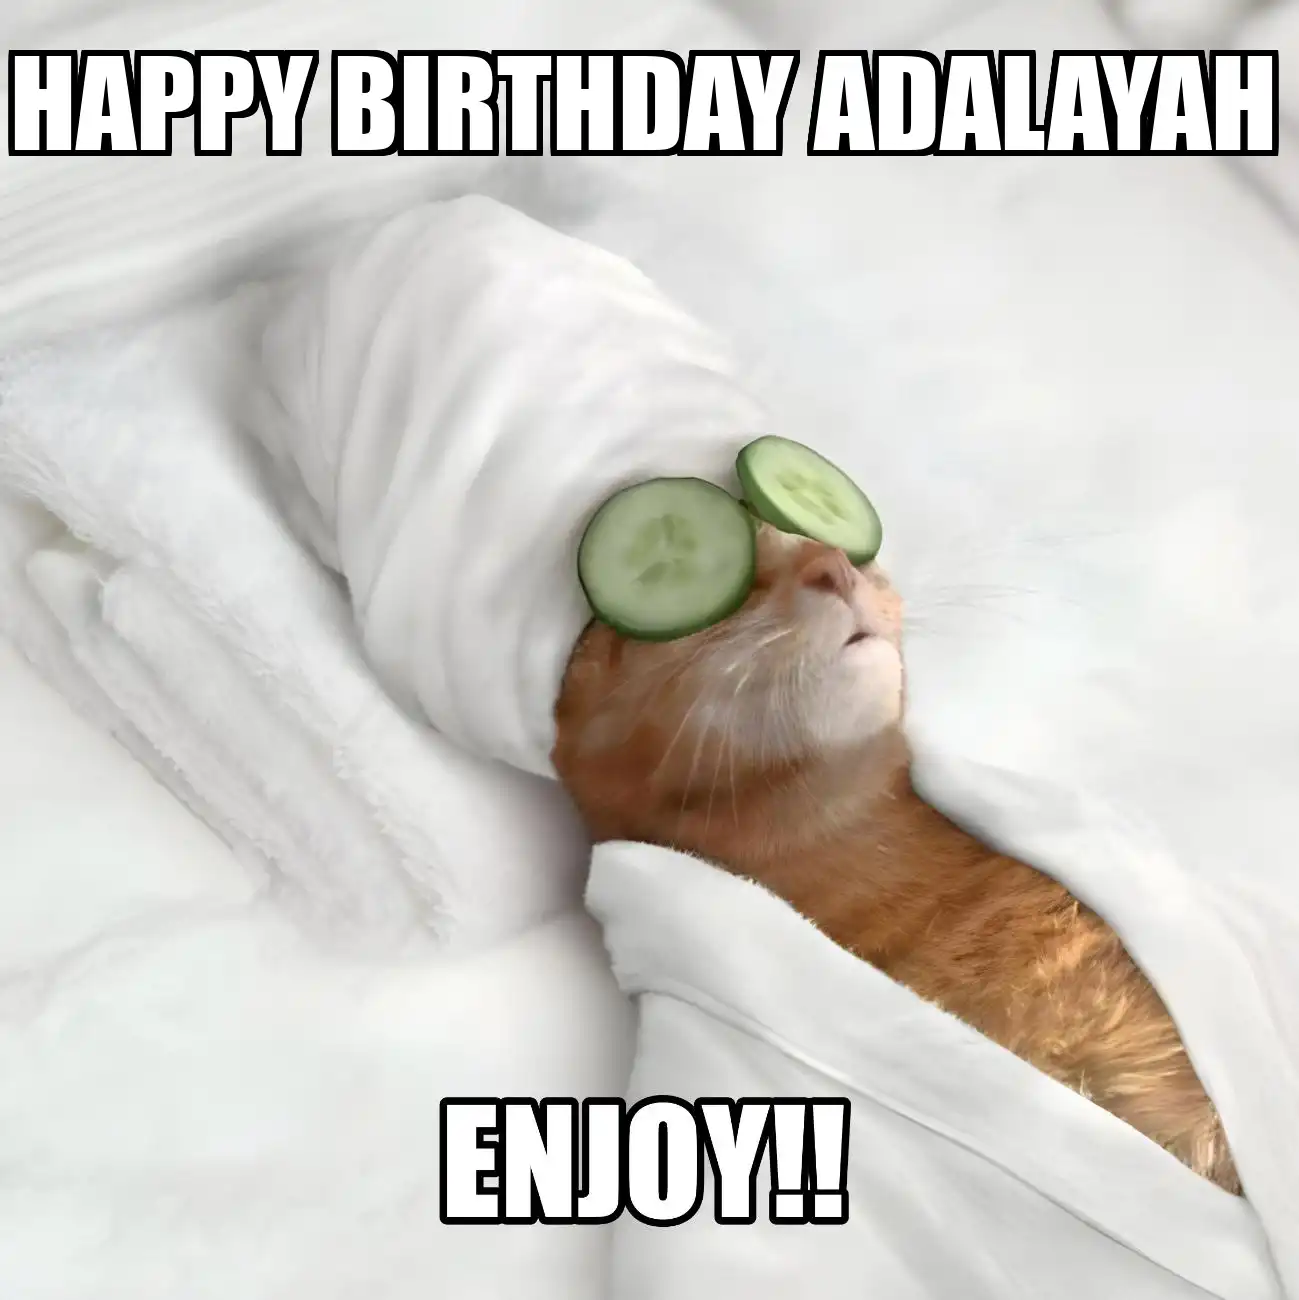 Happy Birthday Adalayah Enjoy Cat Meme